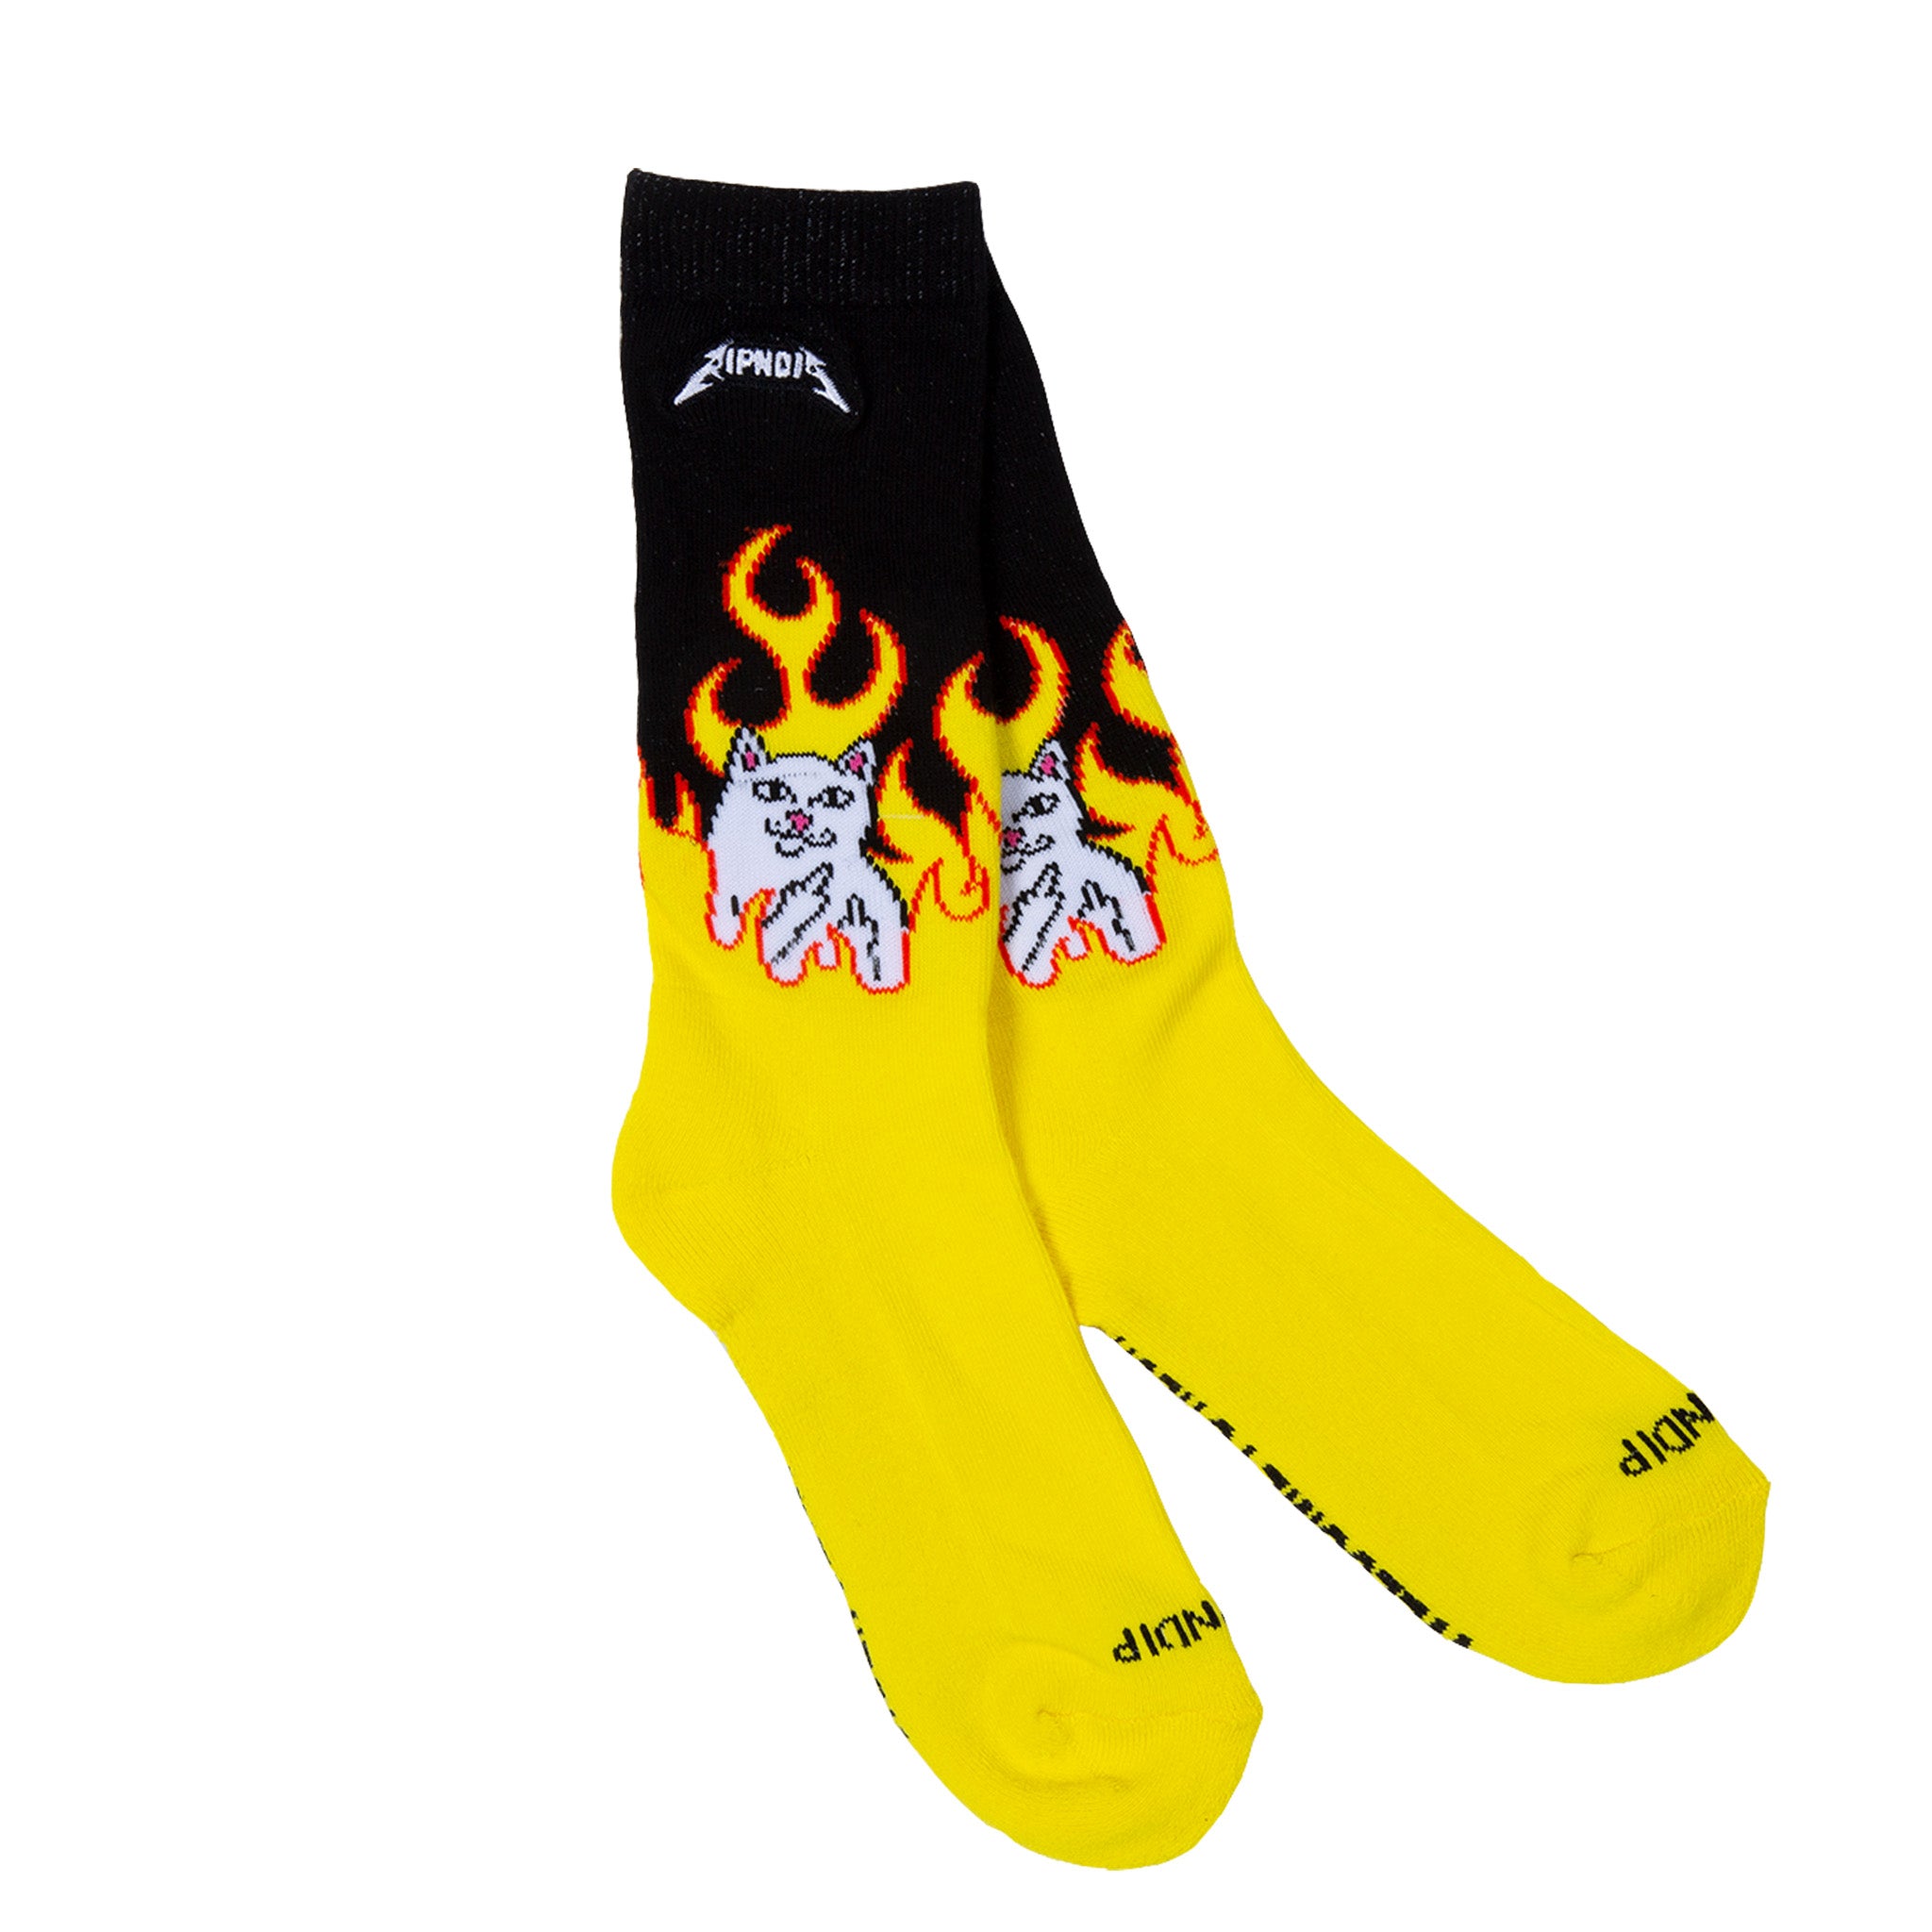 RipNDip Welcome To Heck Socks (Black / Yellow)